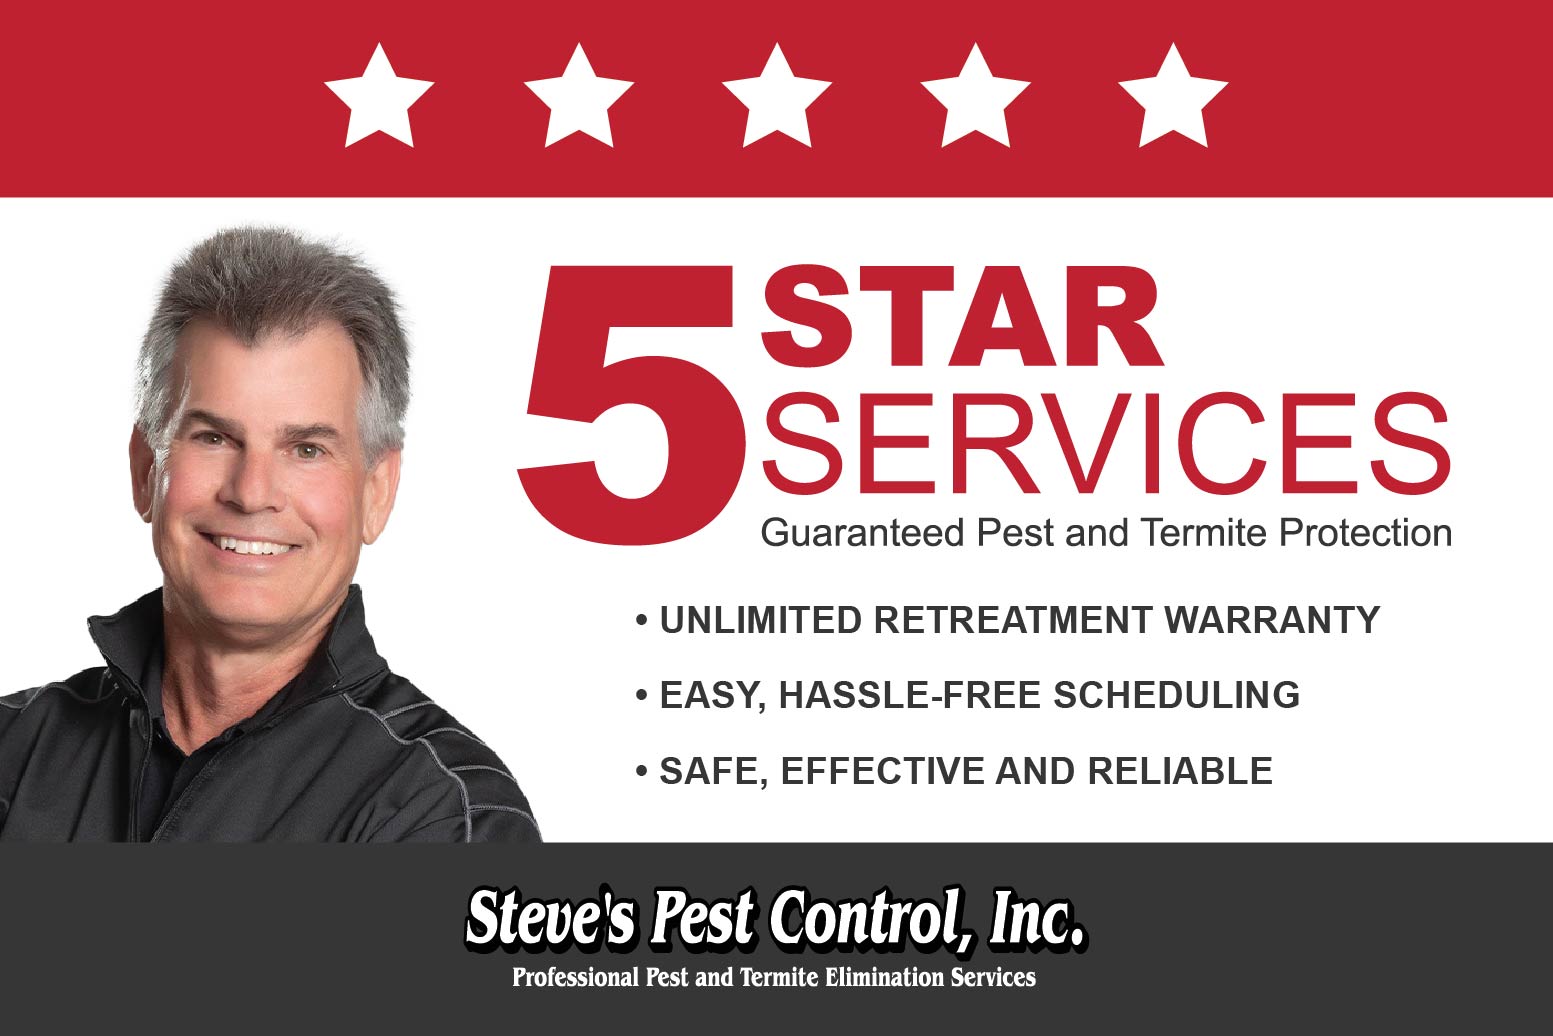 Call Steve's Pest Control for 5 Star Pest Control Service